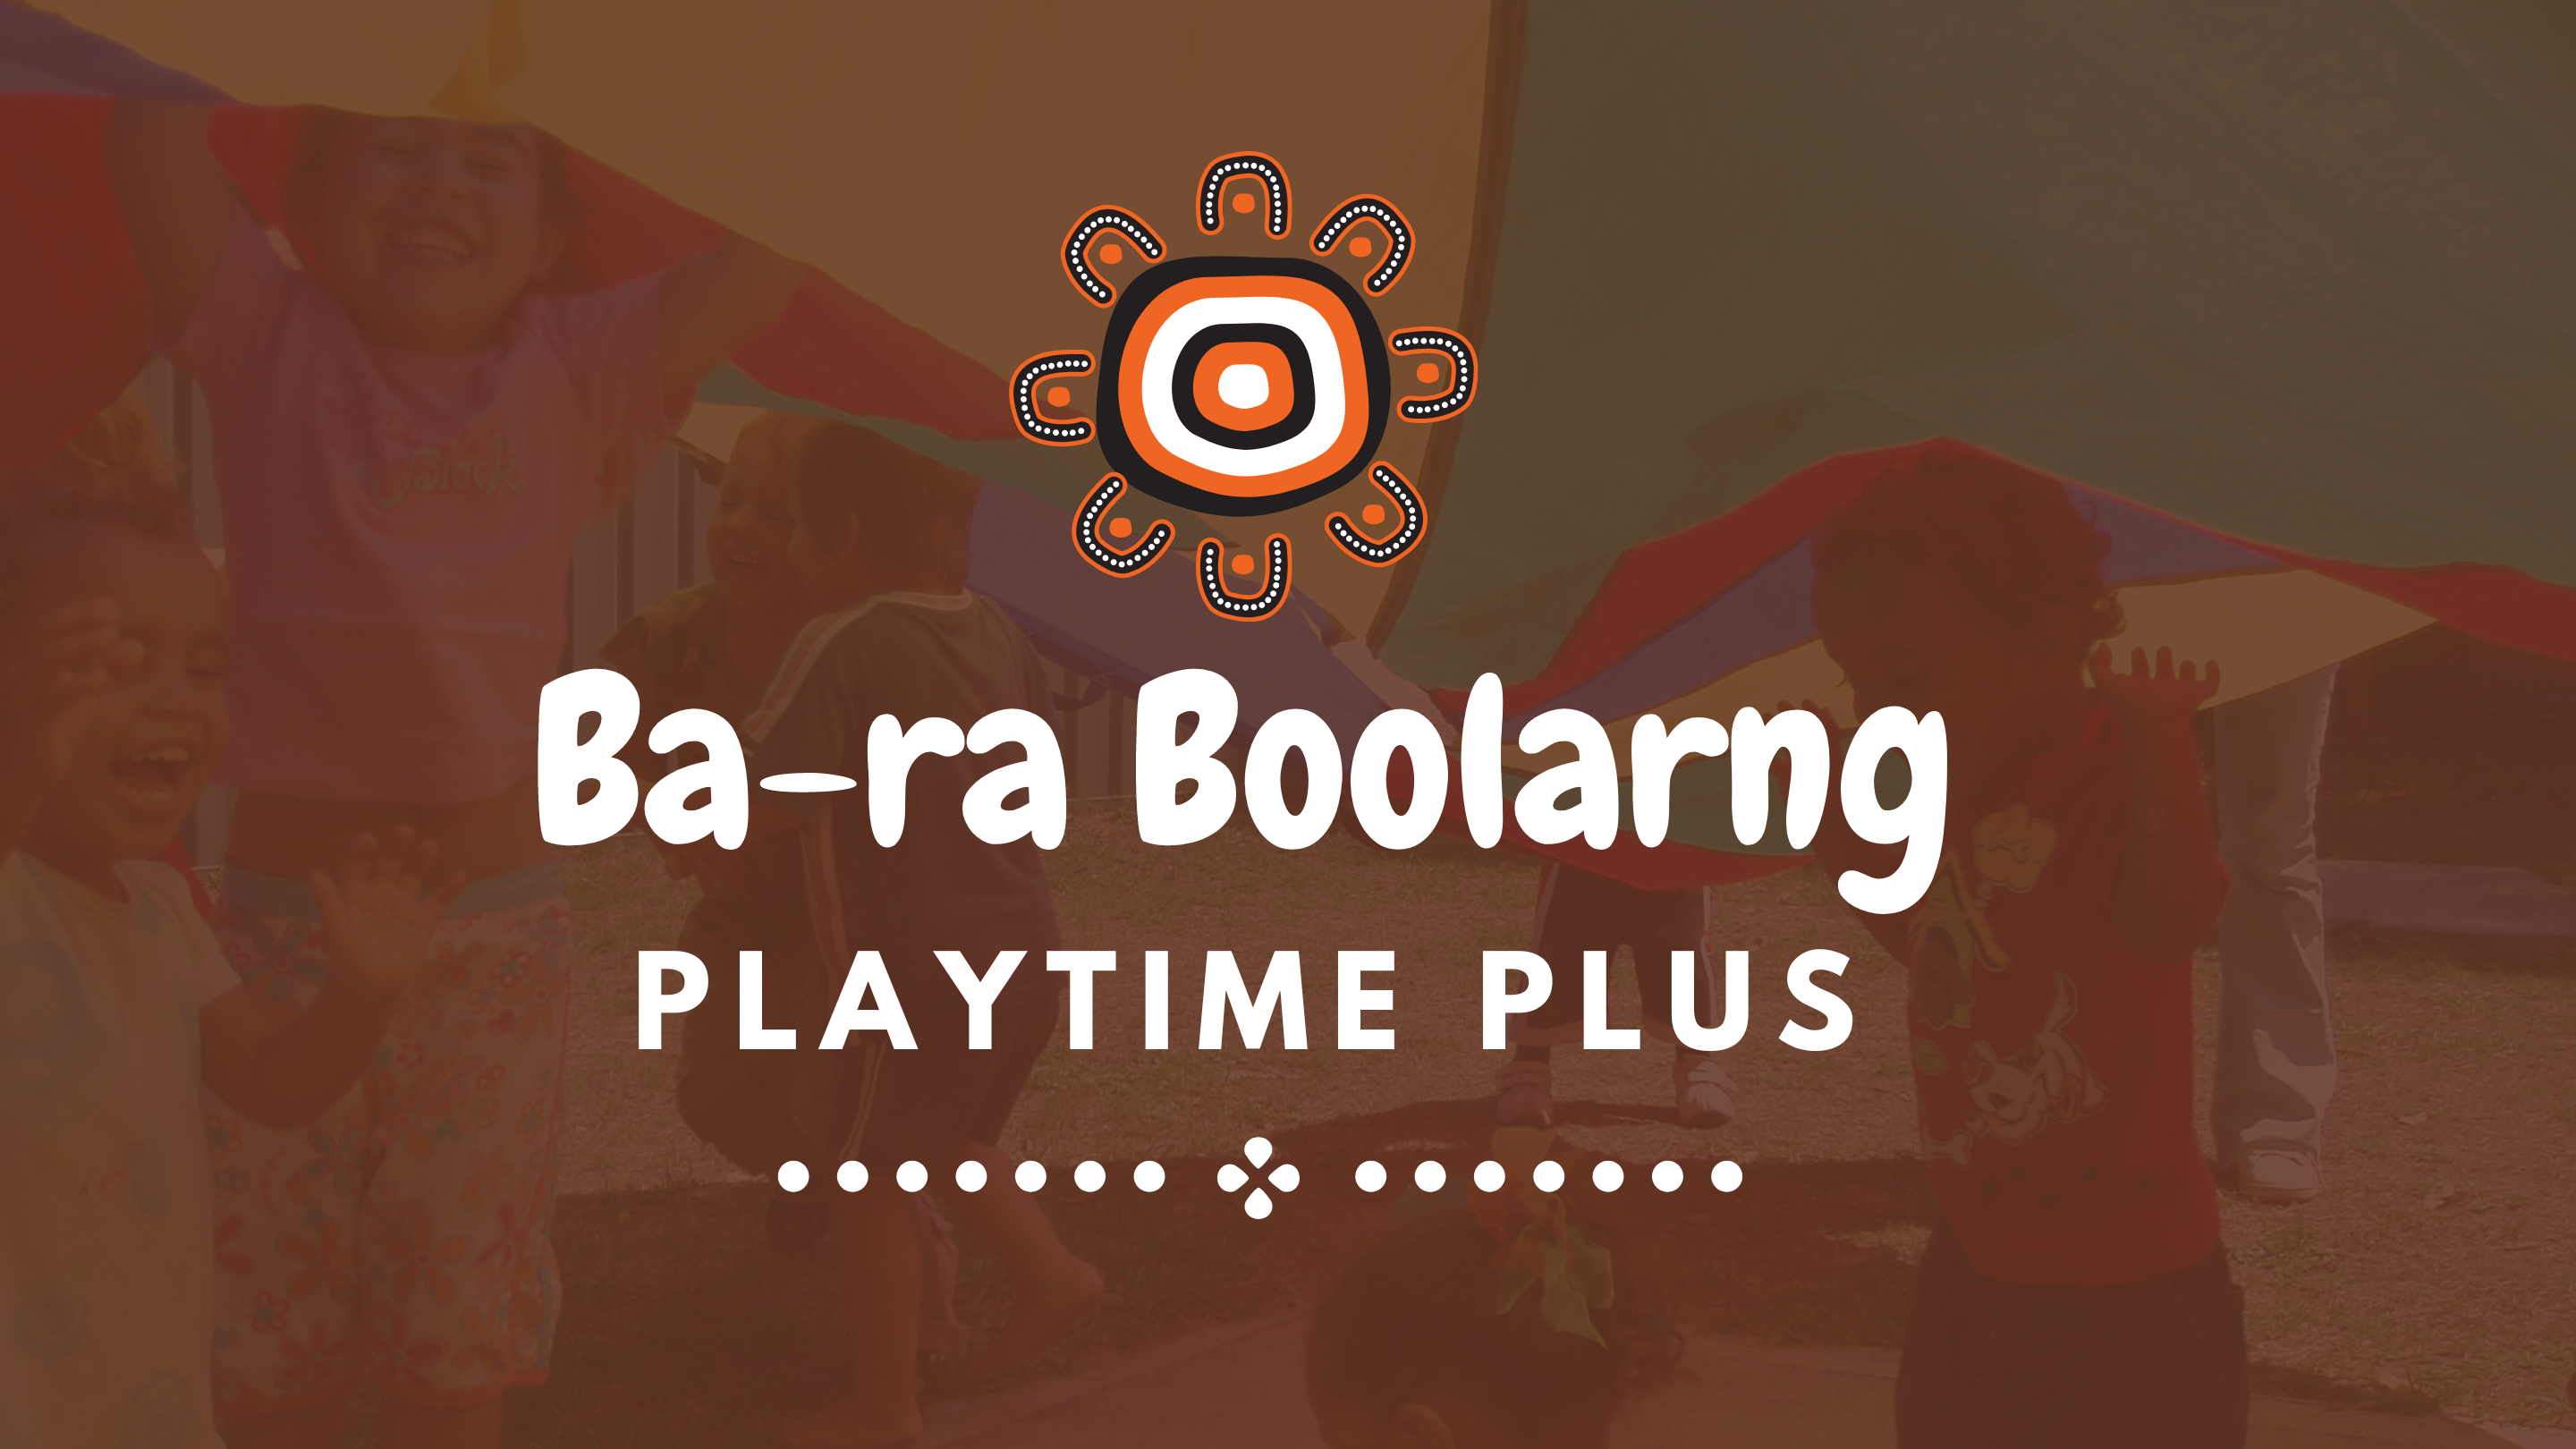 Ba-ra Boolarng Playtime Plus